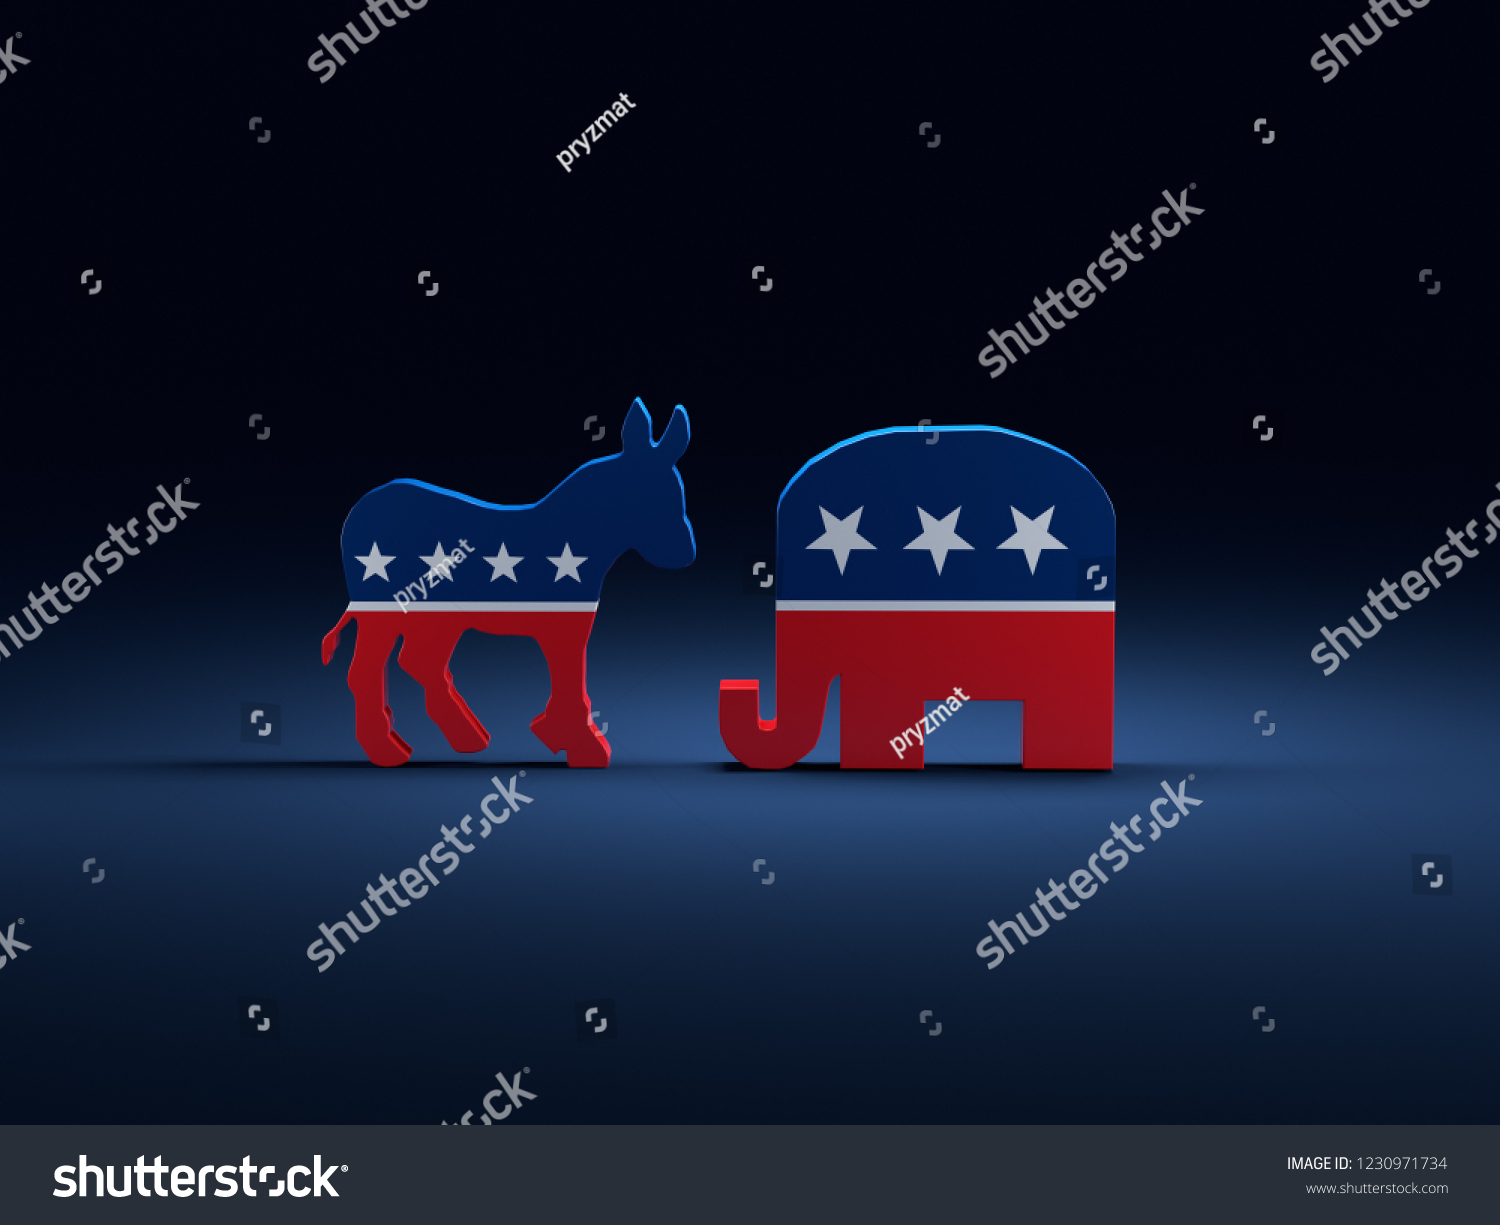 Republican vs democrat Images, Stock Photos & Vectors | Shutterstock